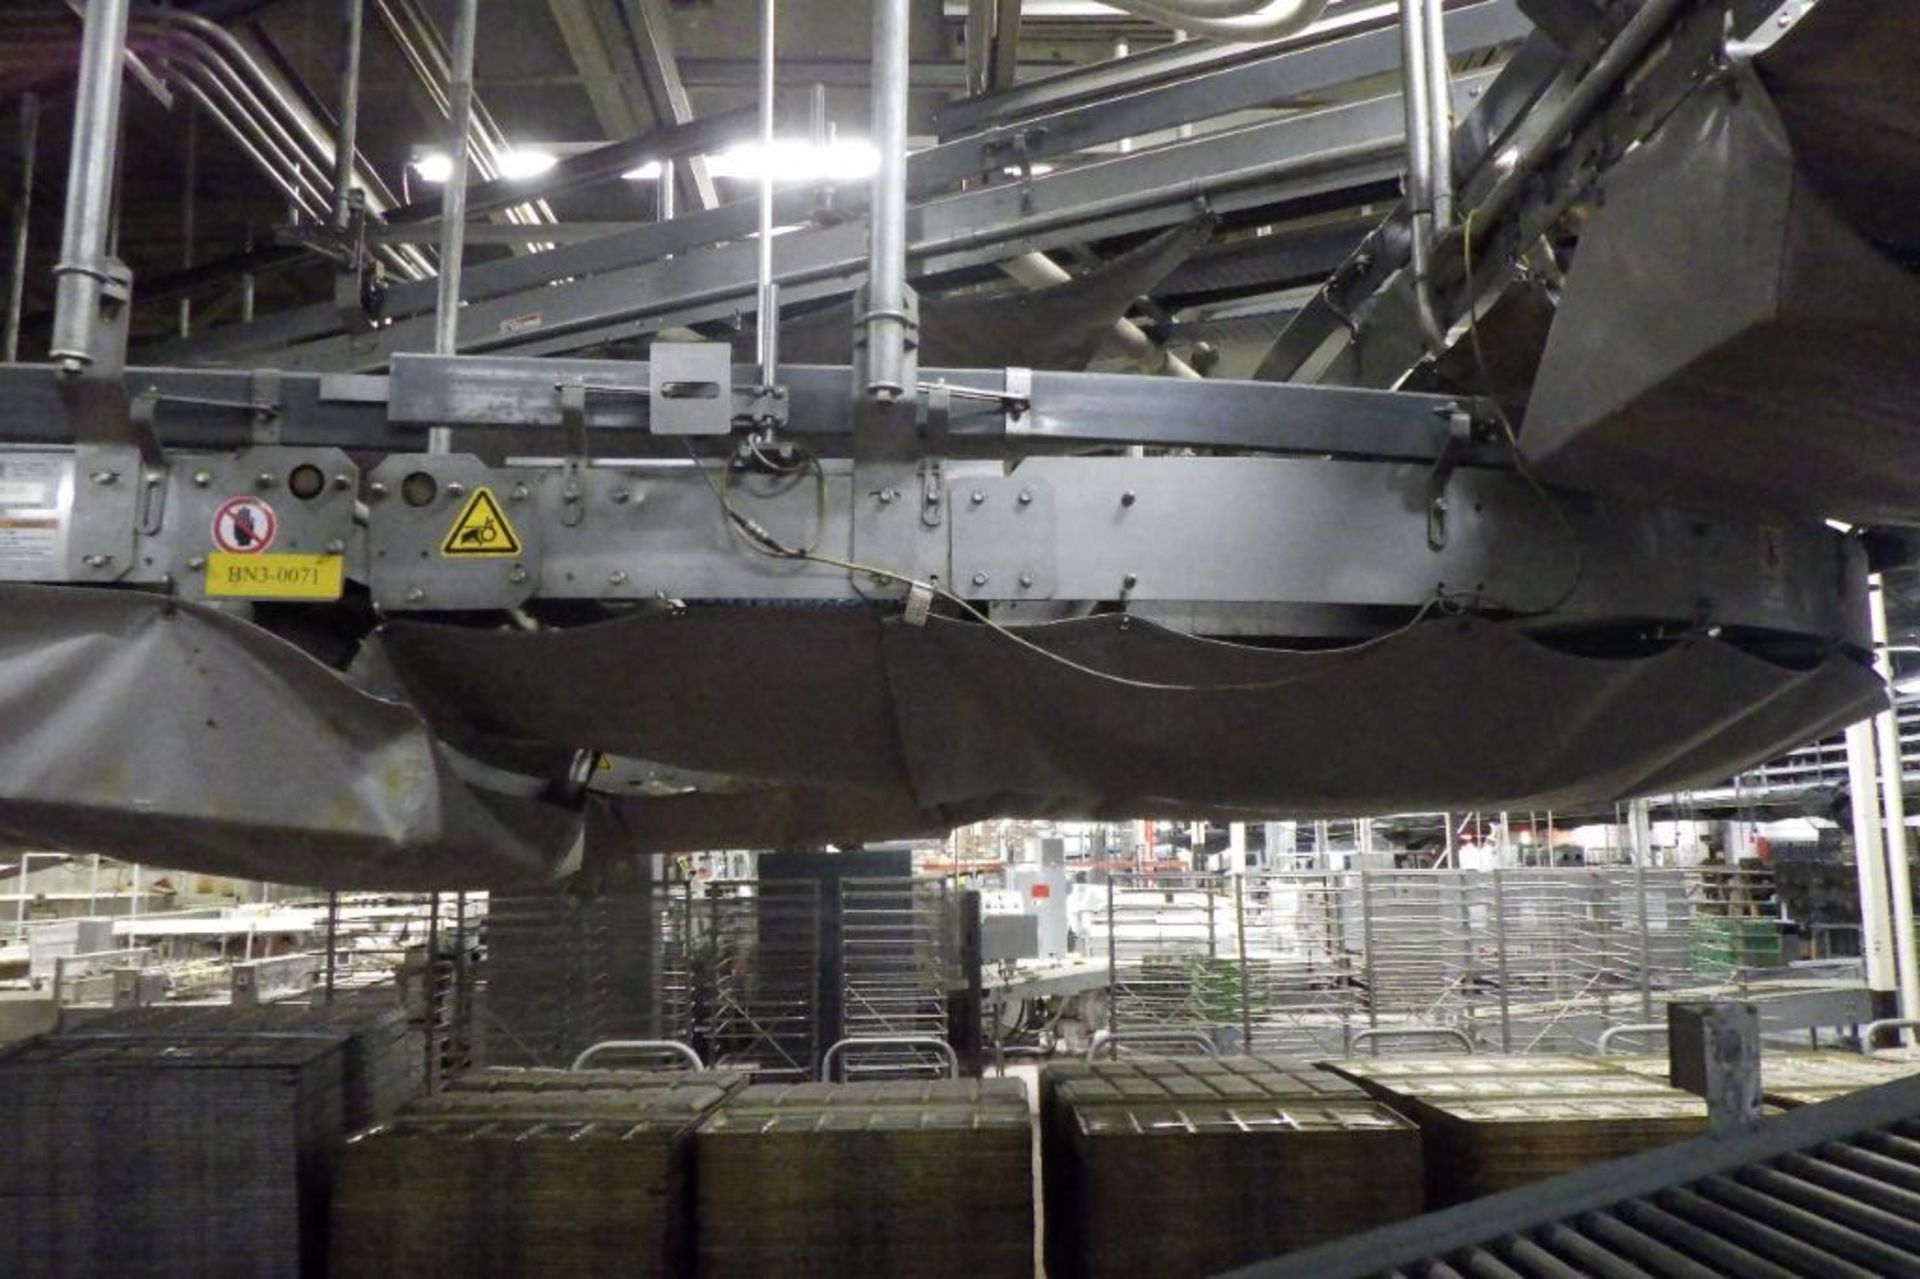 Stewart systems overhead conveyor - Image 17 of 29